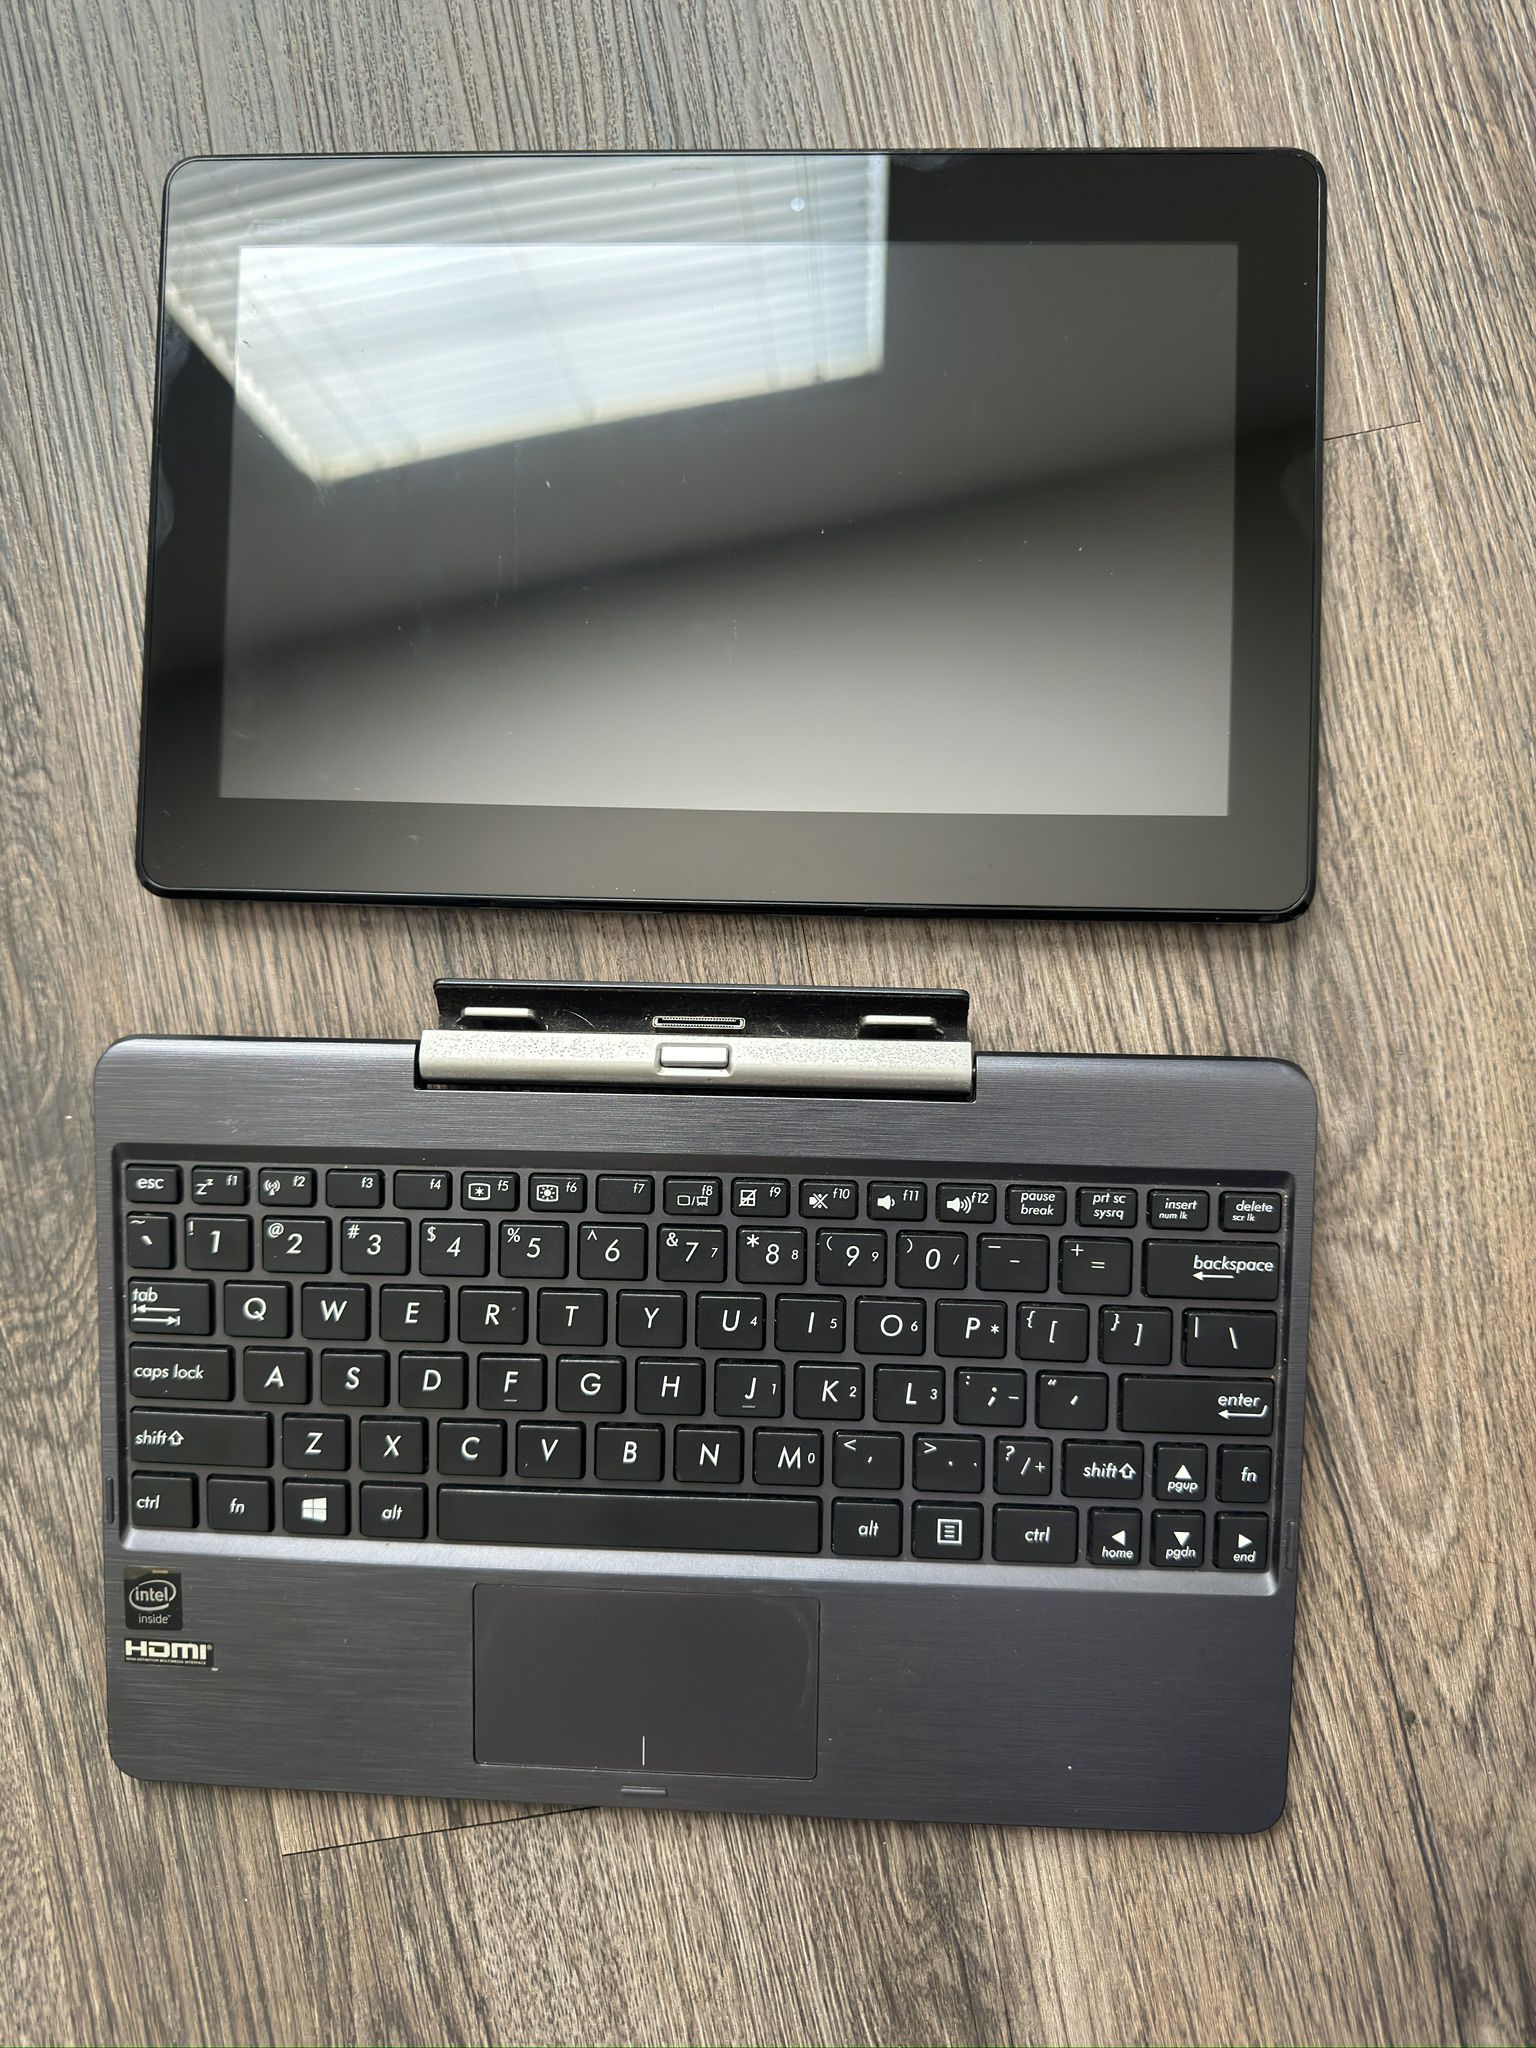 ASUS Portable Laptop